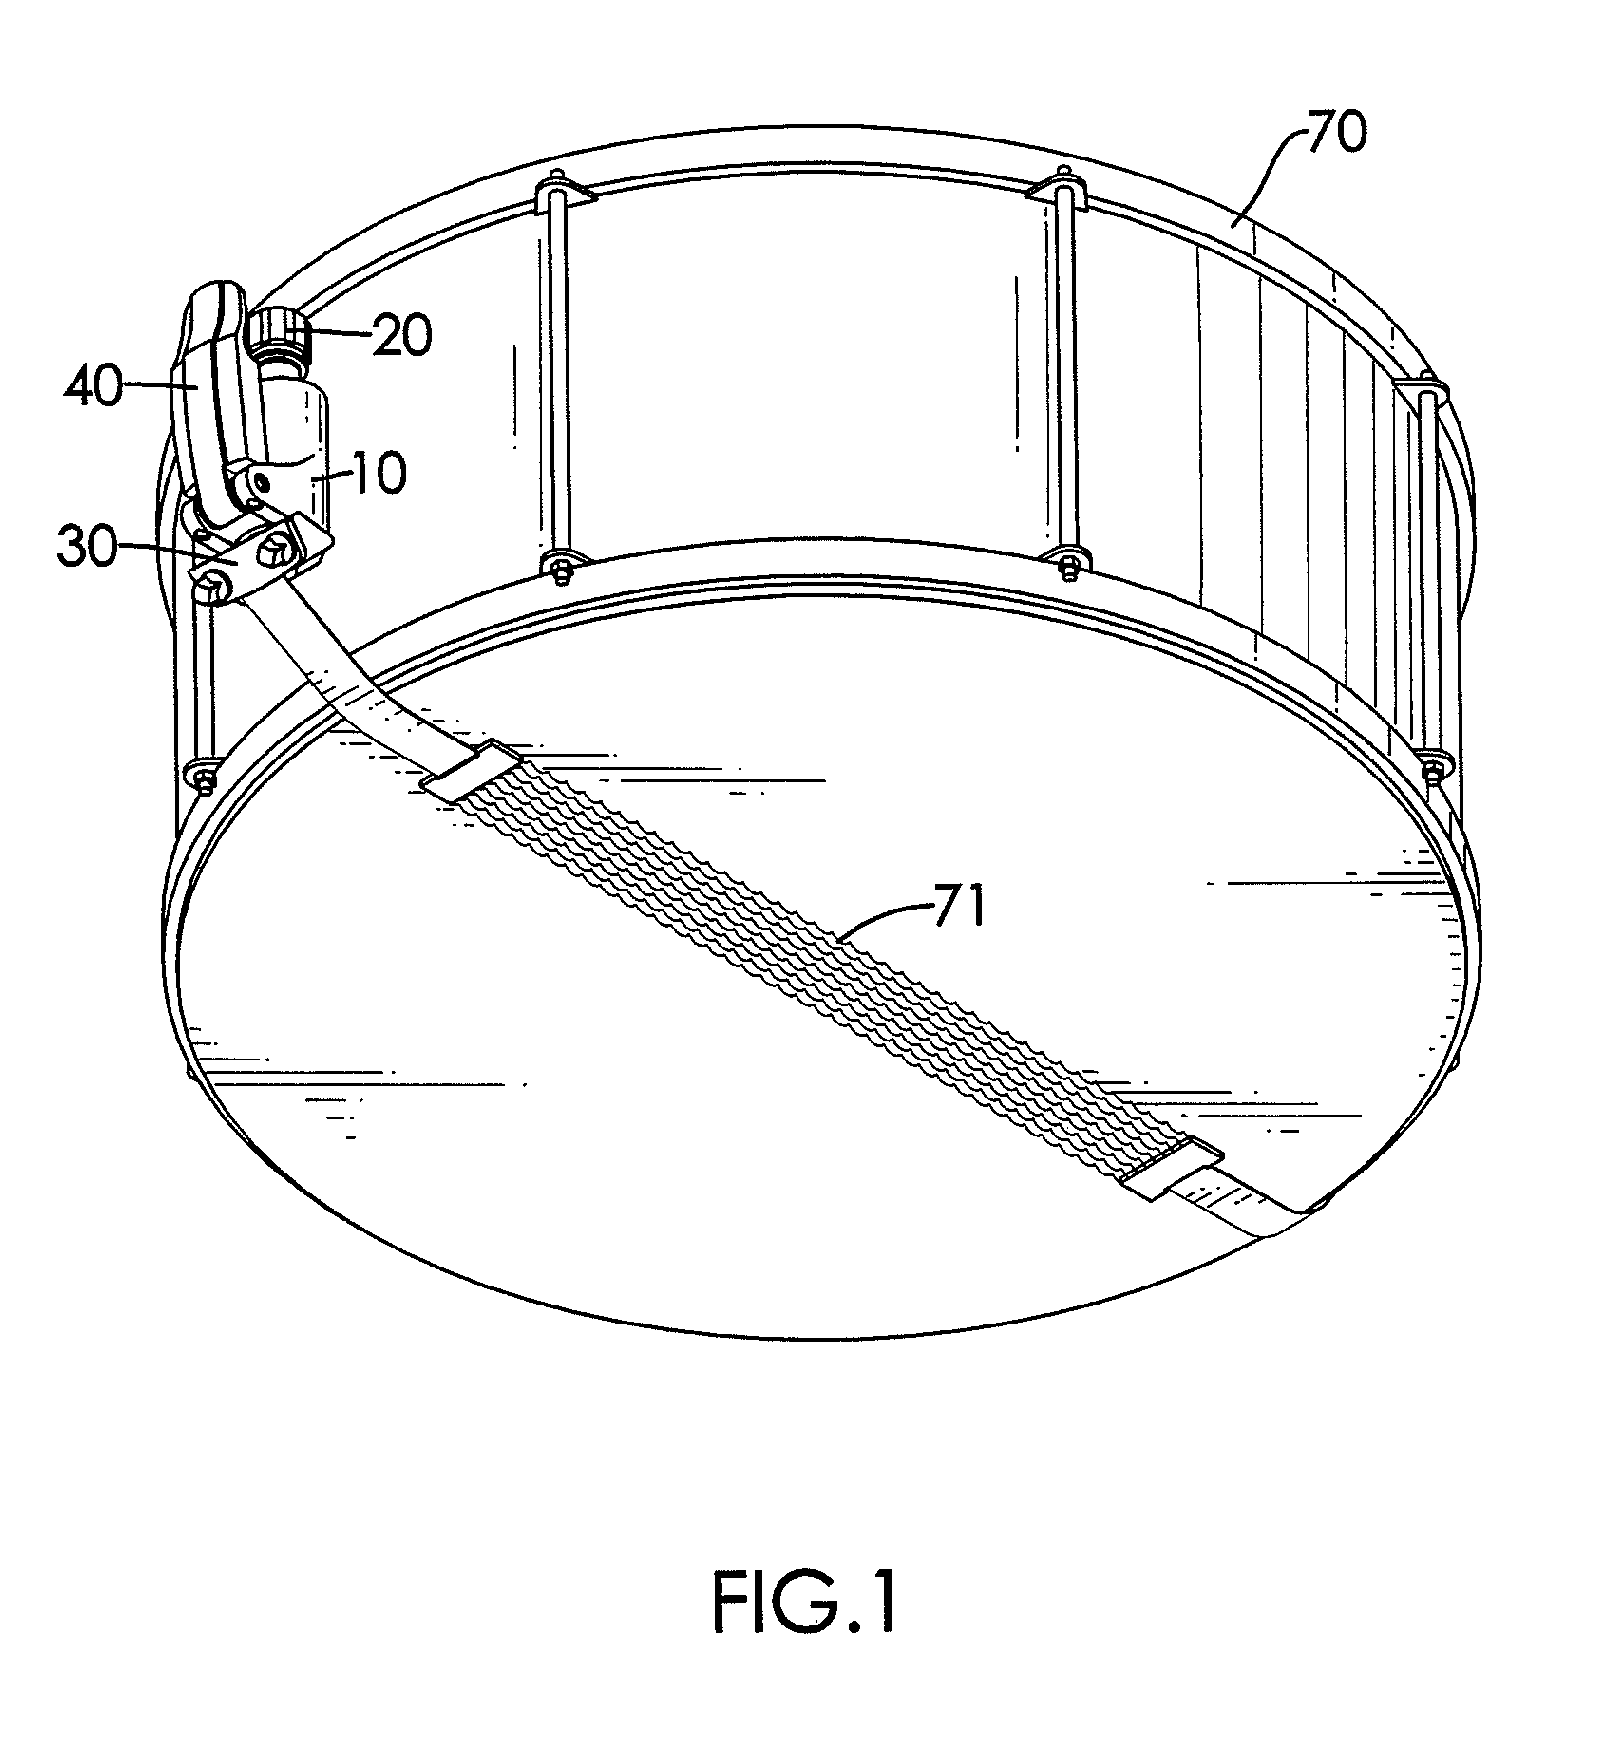 Snare-adjusting device for a snare drum